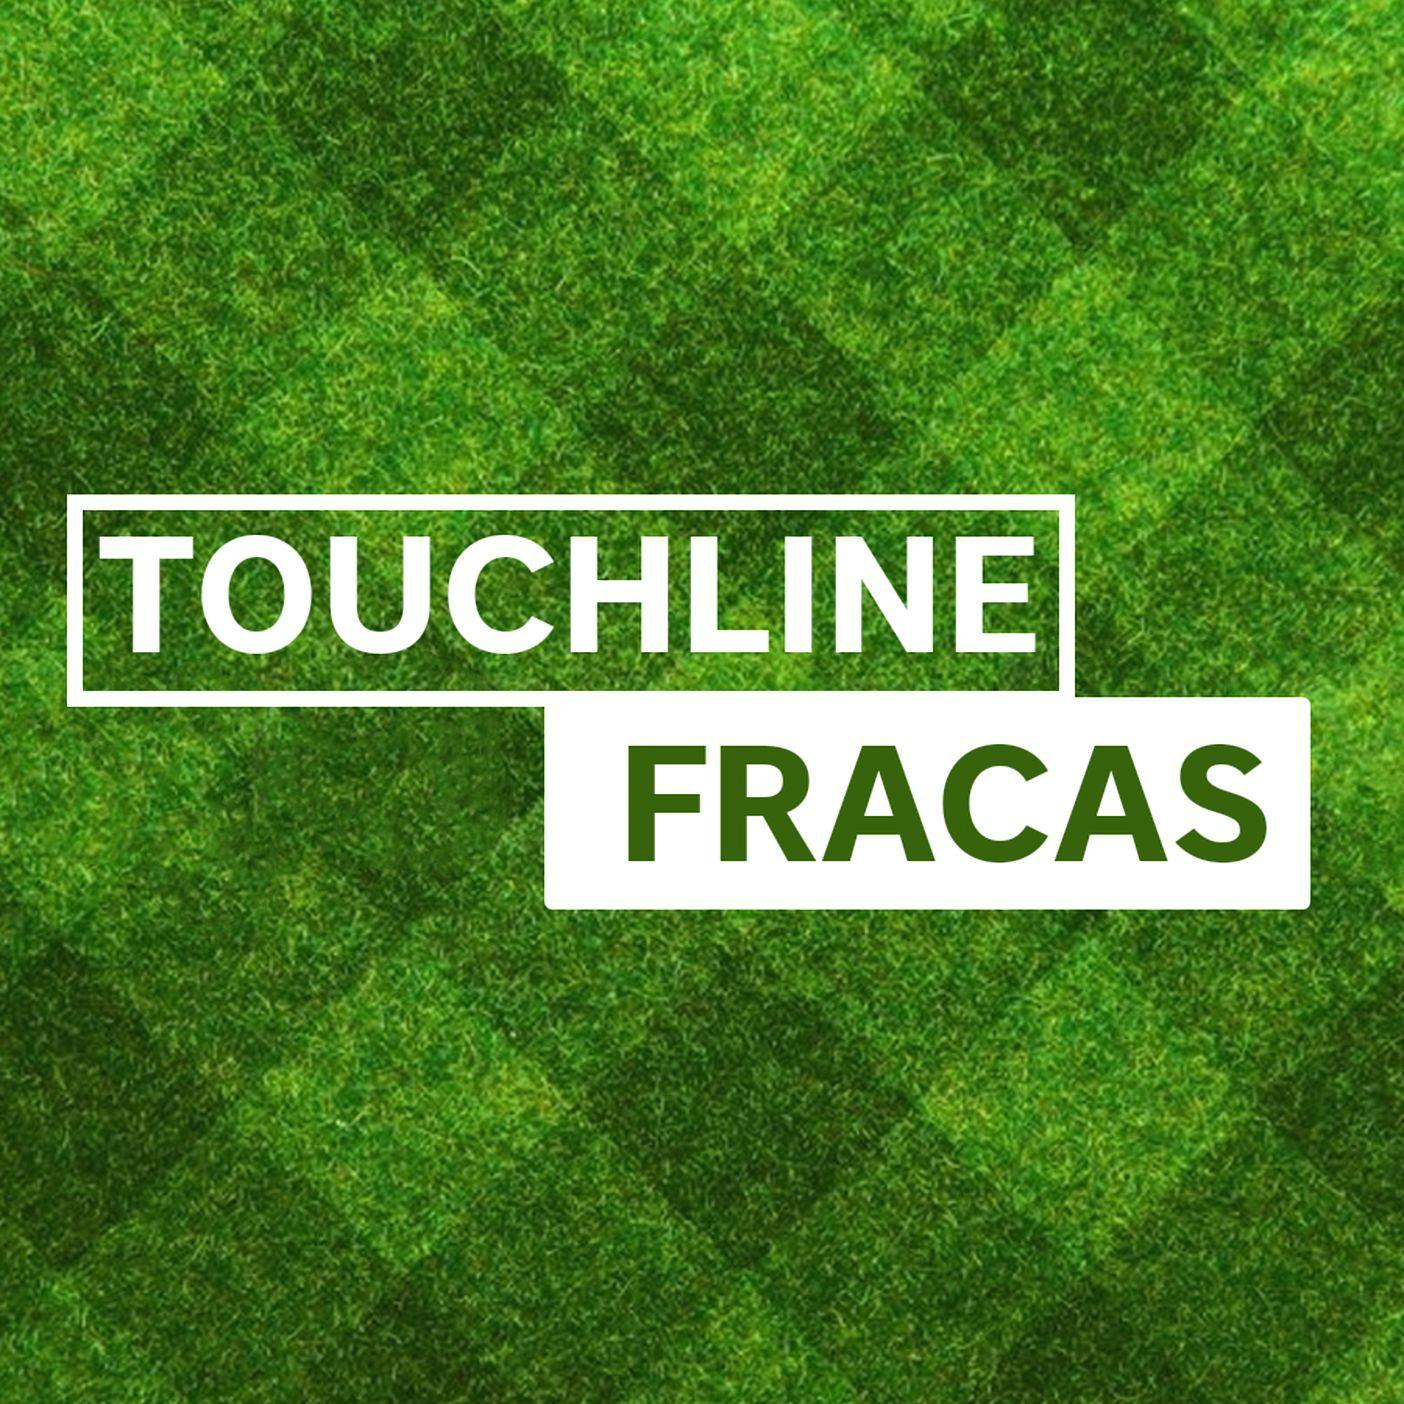 530: Touchline Fracas - The History of the Tottenham